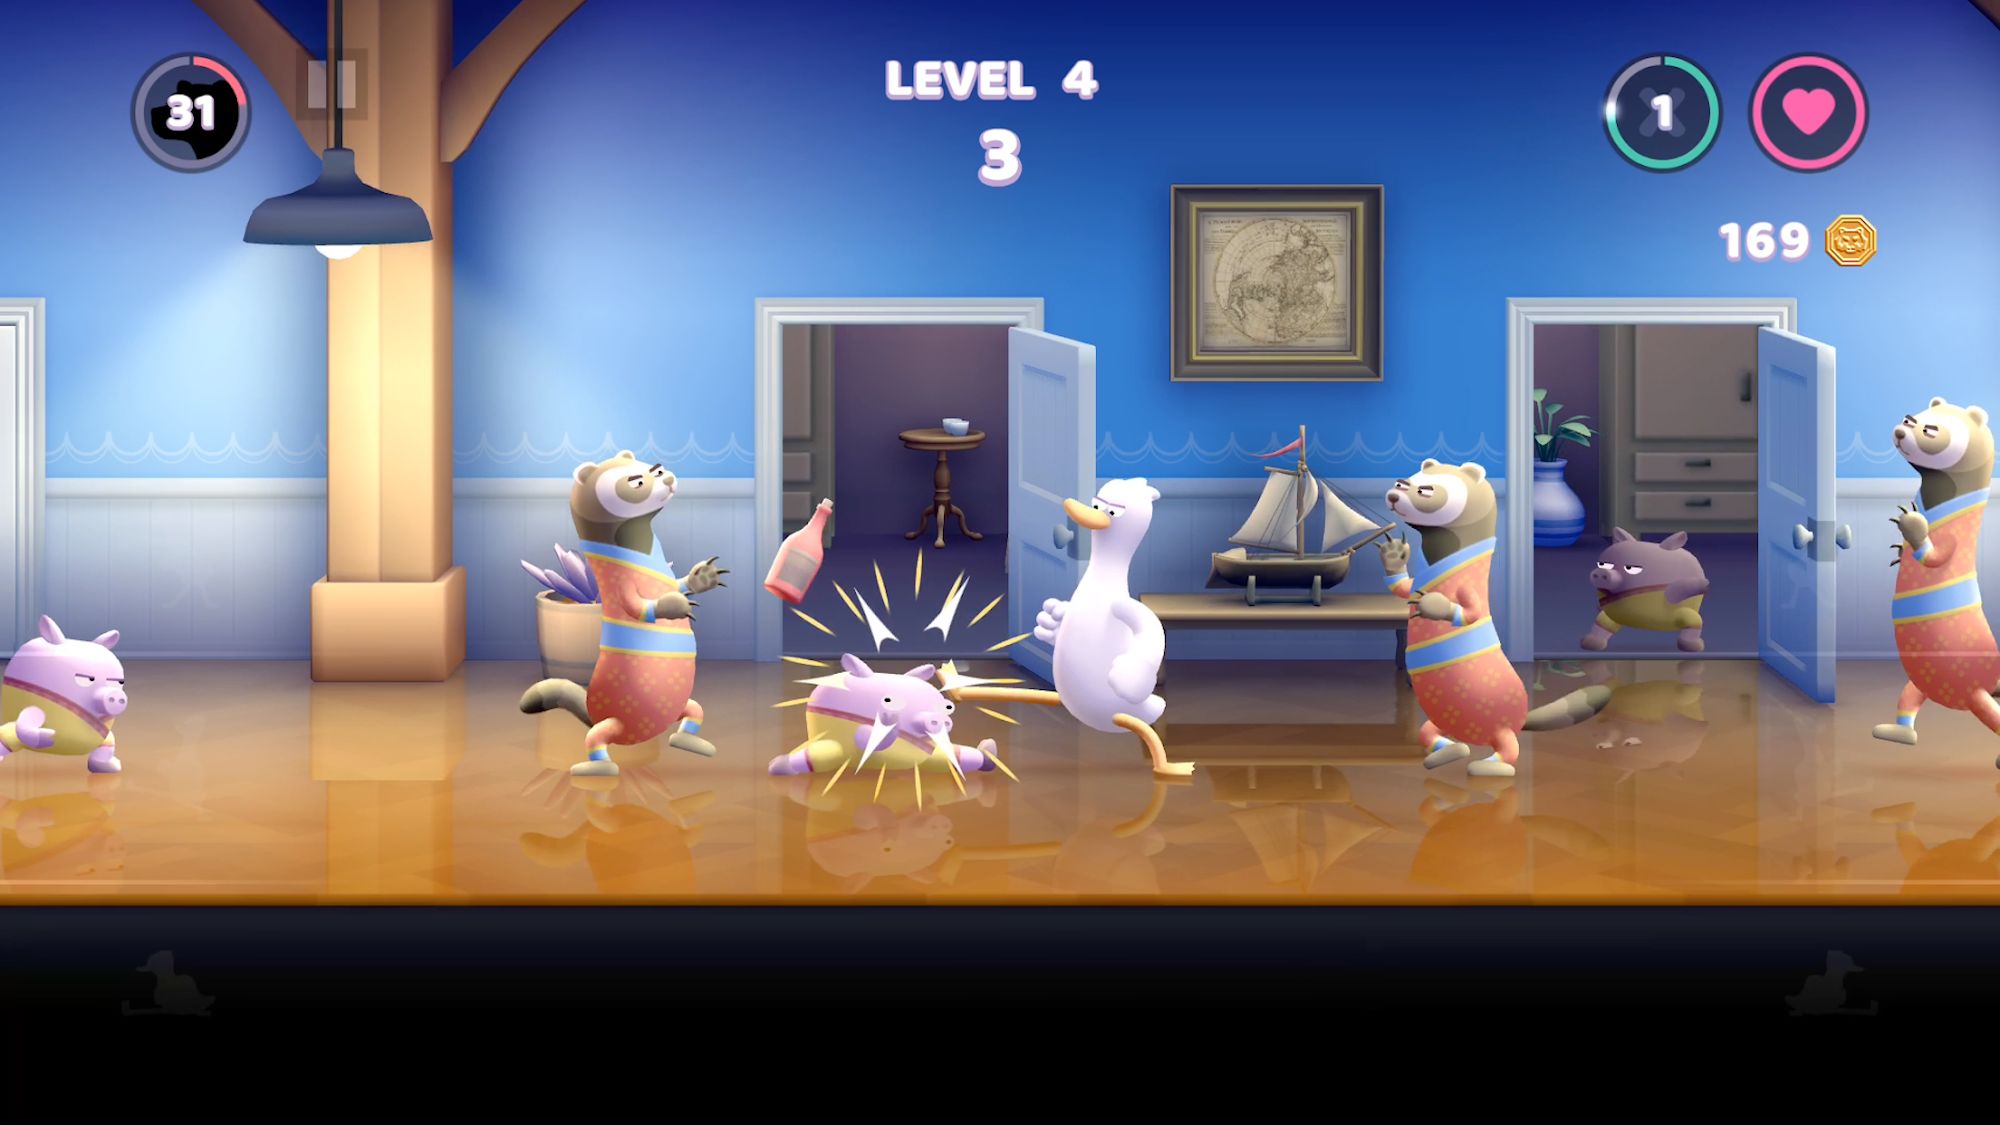 Punch Kick Duck - Android game screenshots.